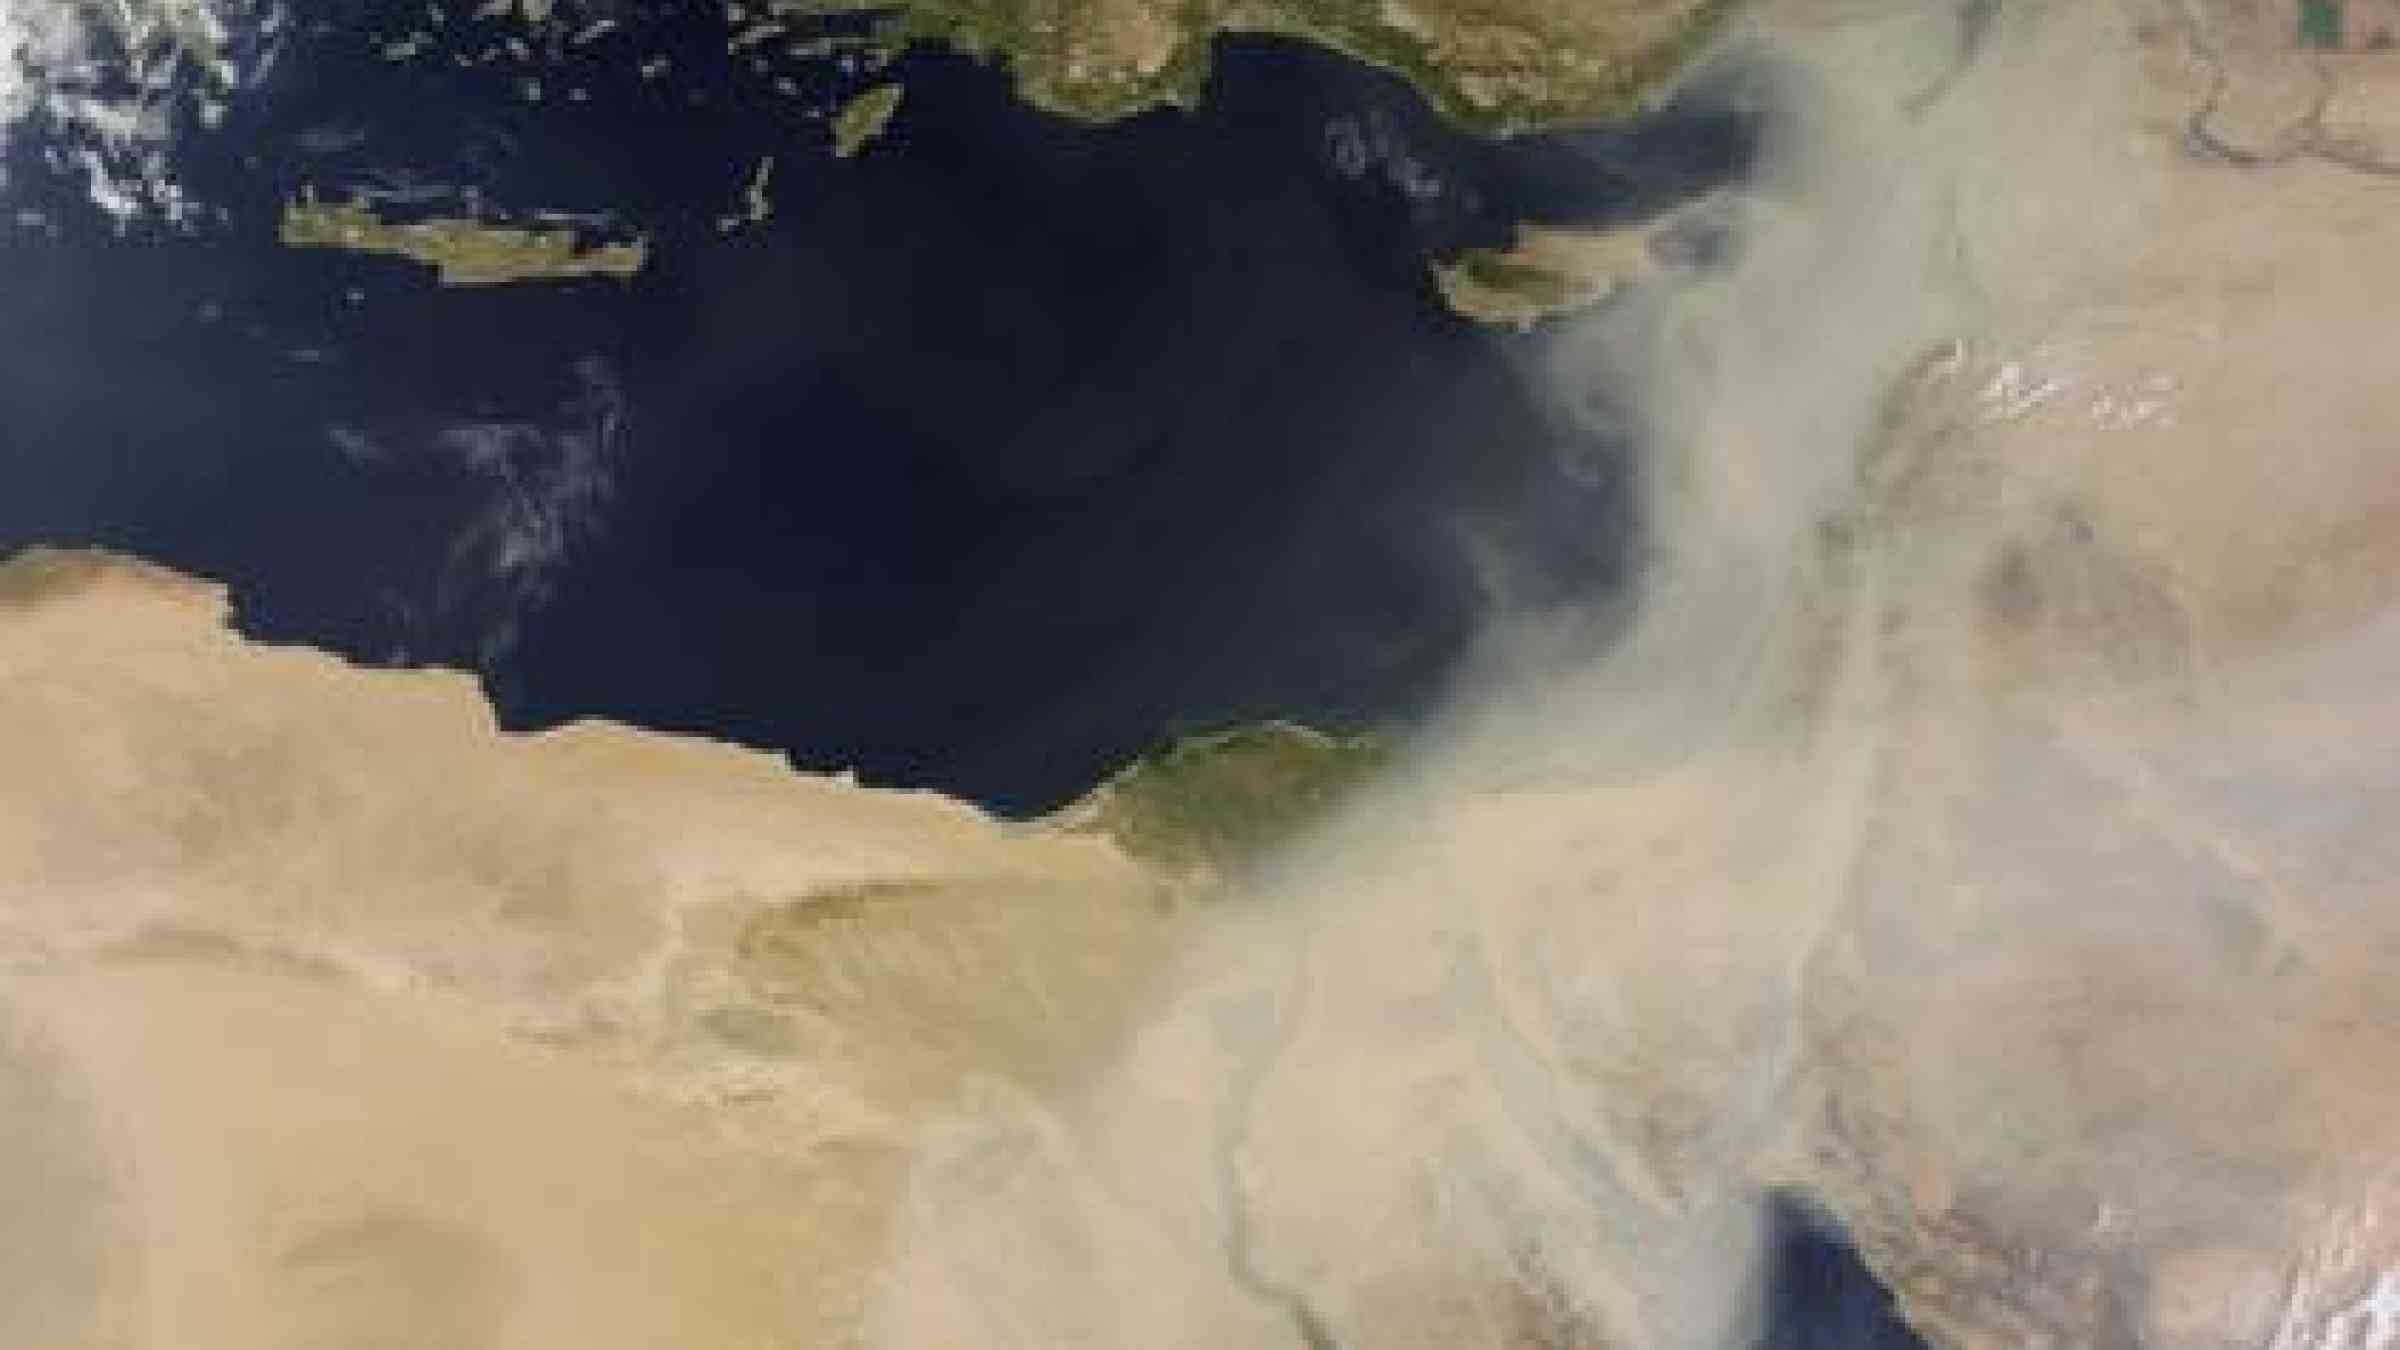 Snapshot of the sandstorm taken from NASA Earth Data